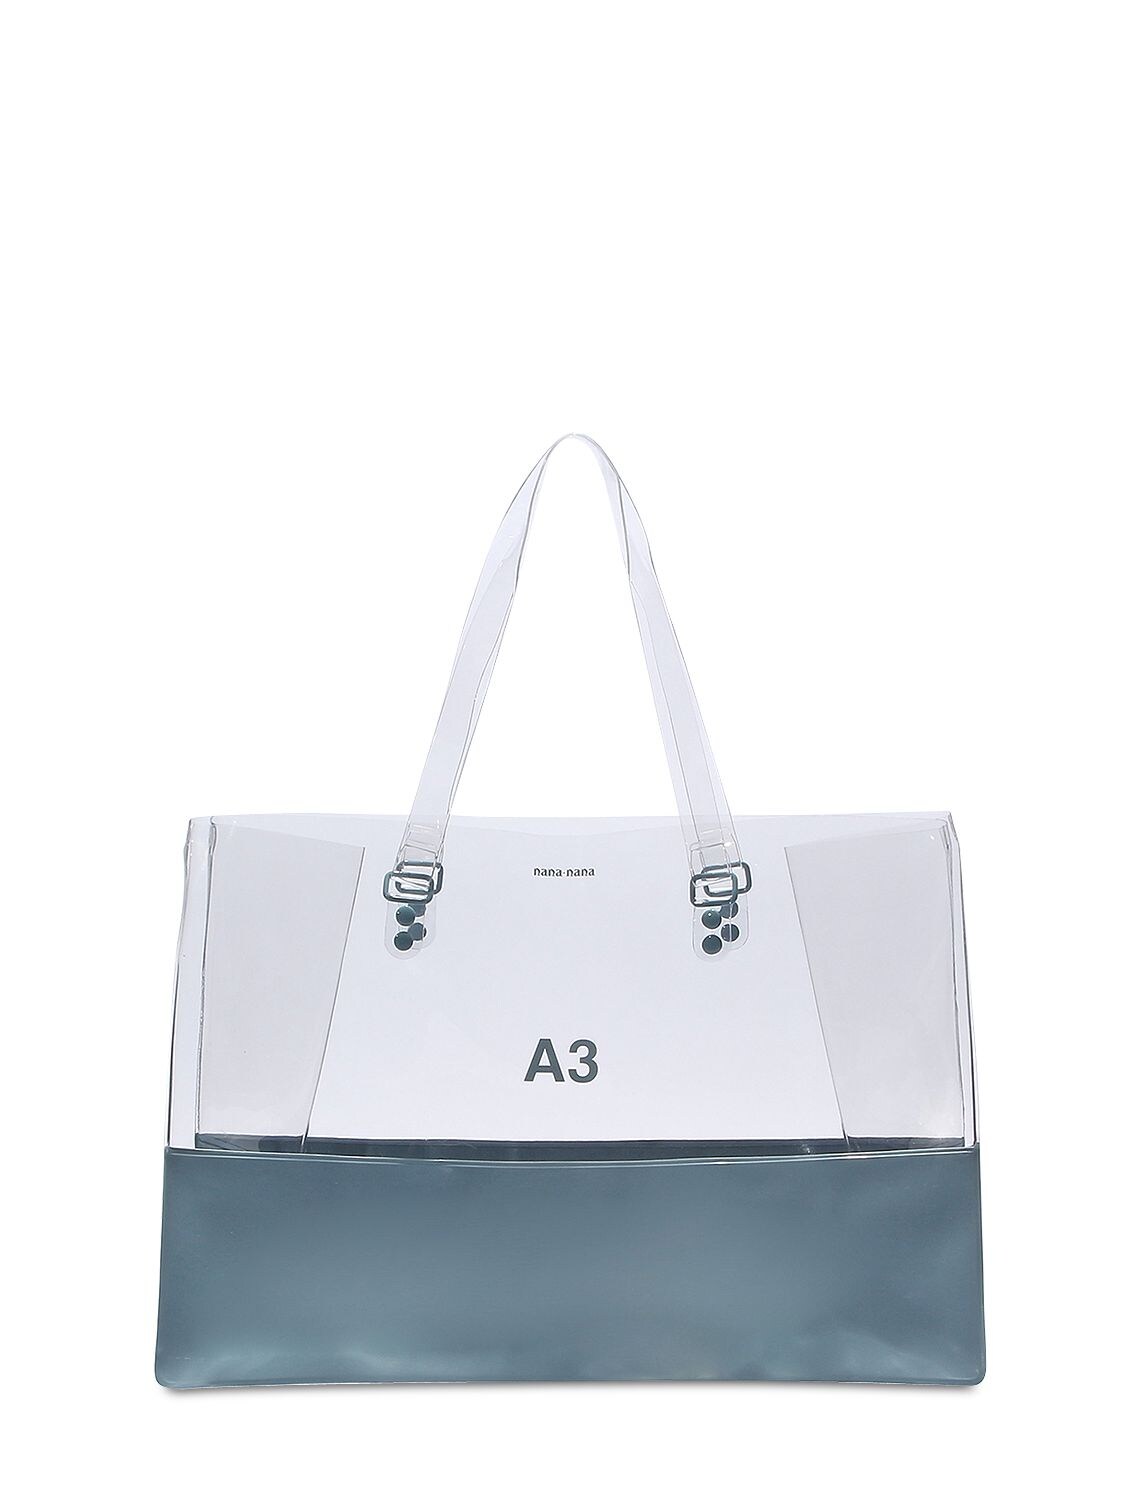 Nana-nana A3 Pvc Shopping Tote Bag In Clear,grey